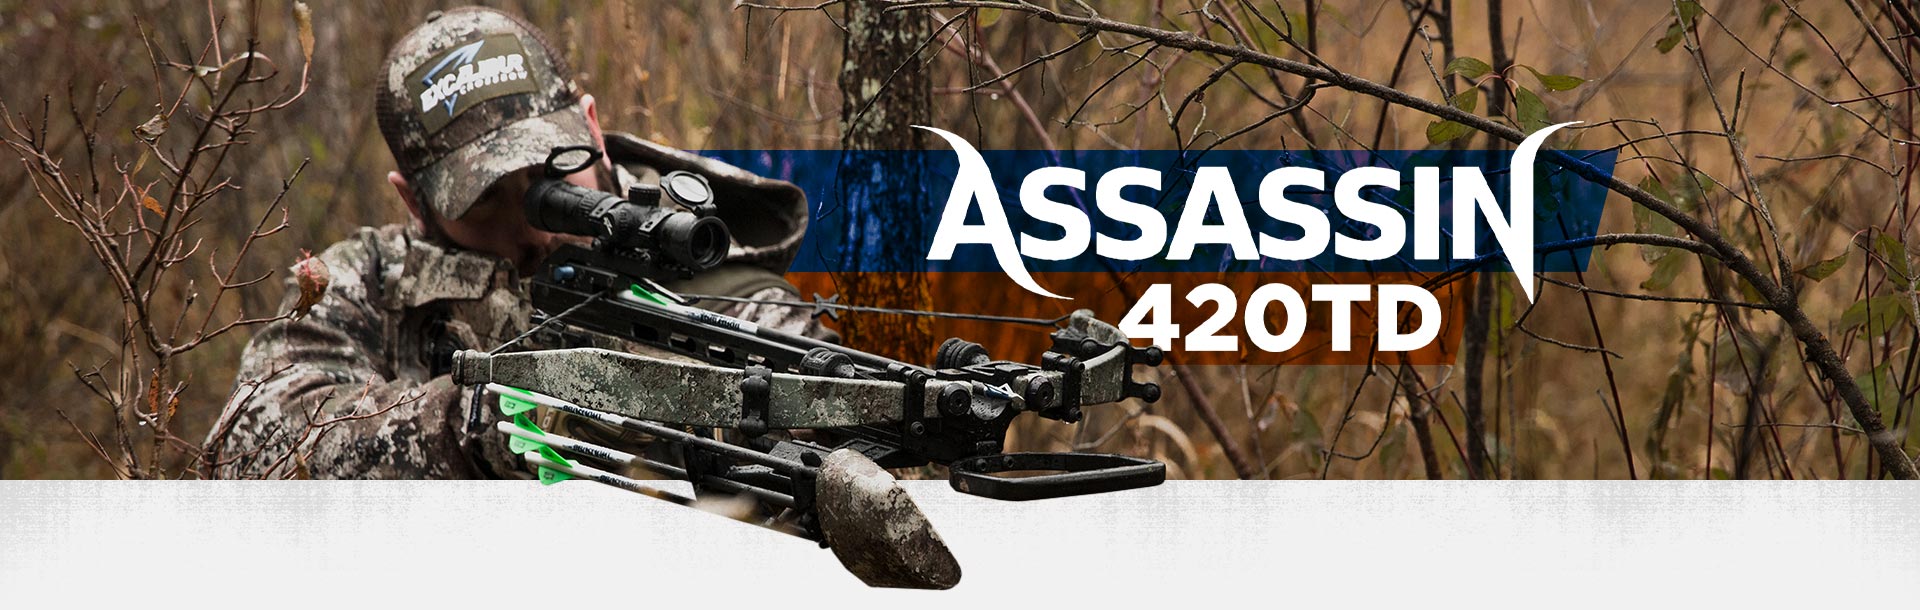 Excalibur Assassin 420TD crossbow in camo